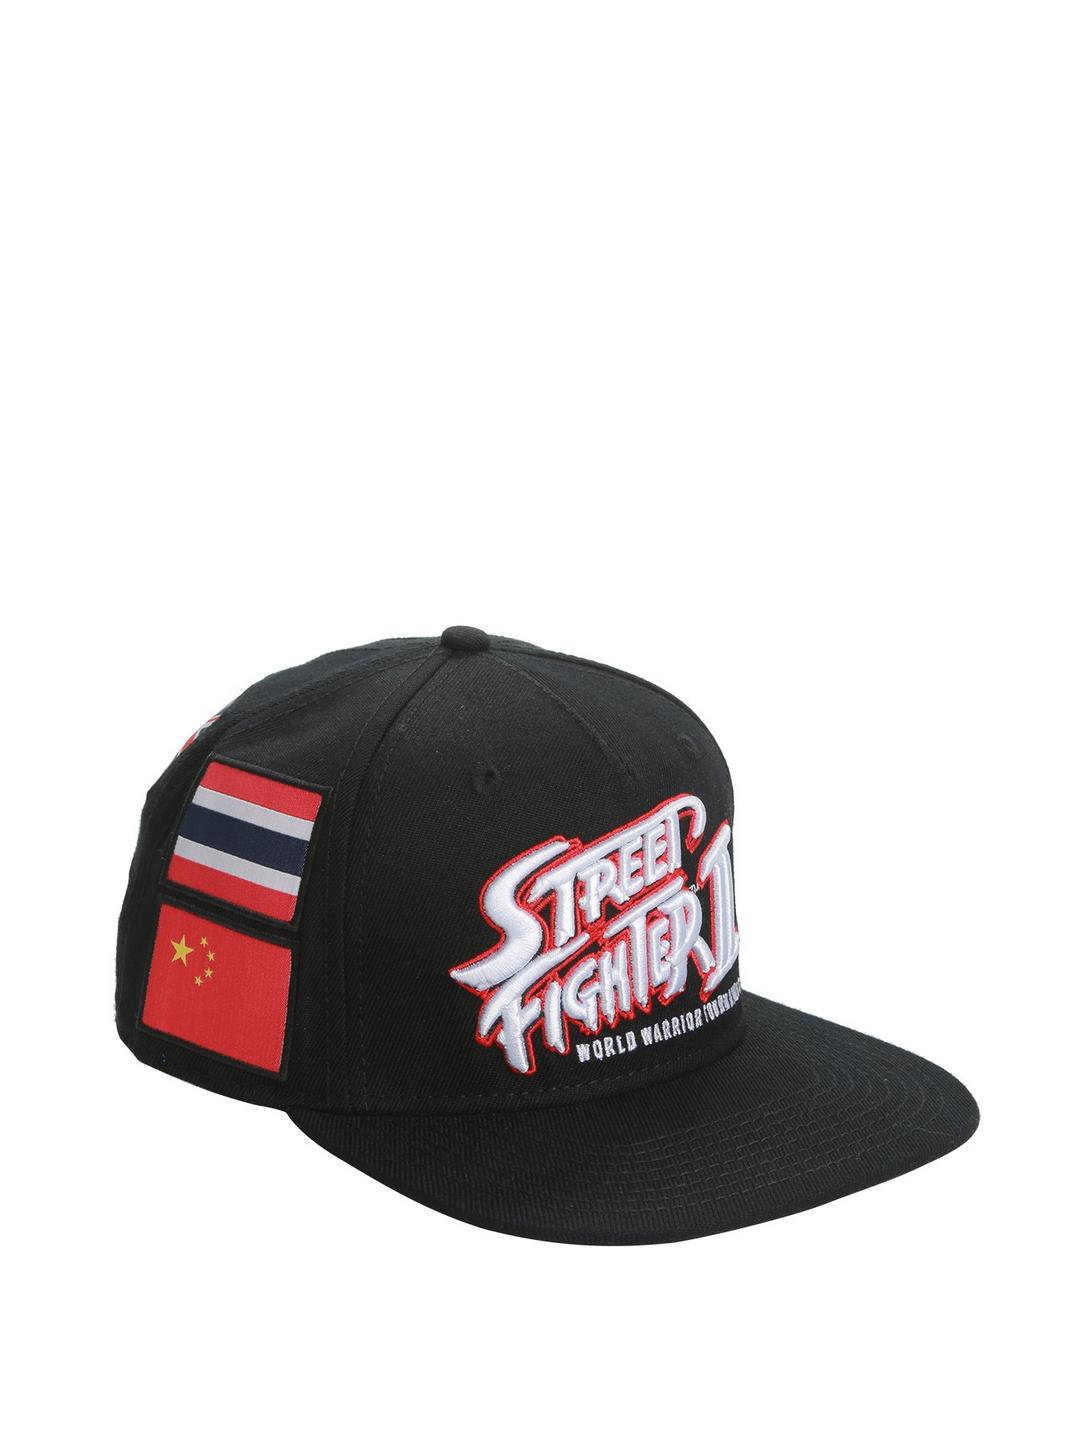 Street Fighter II World Warrior Tournament Snapback Hat, , hi-res